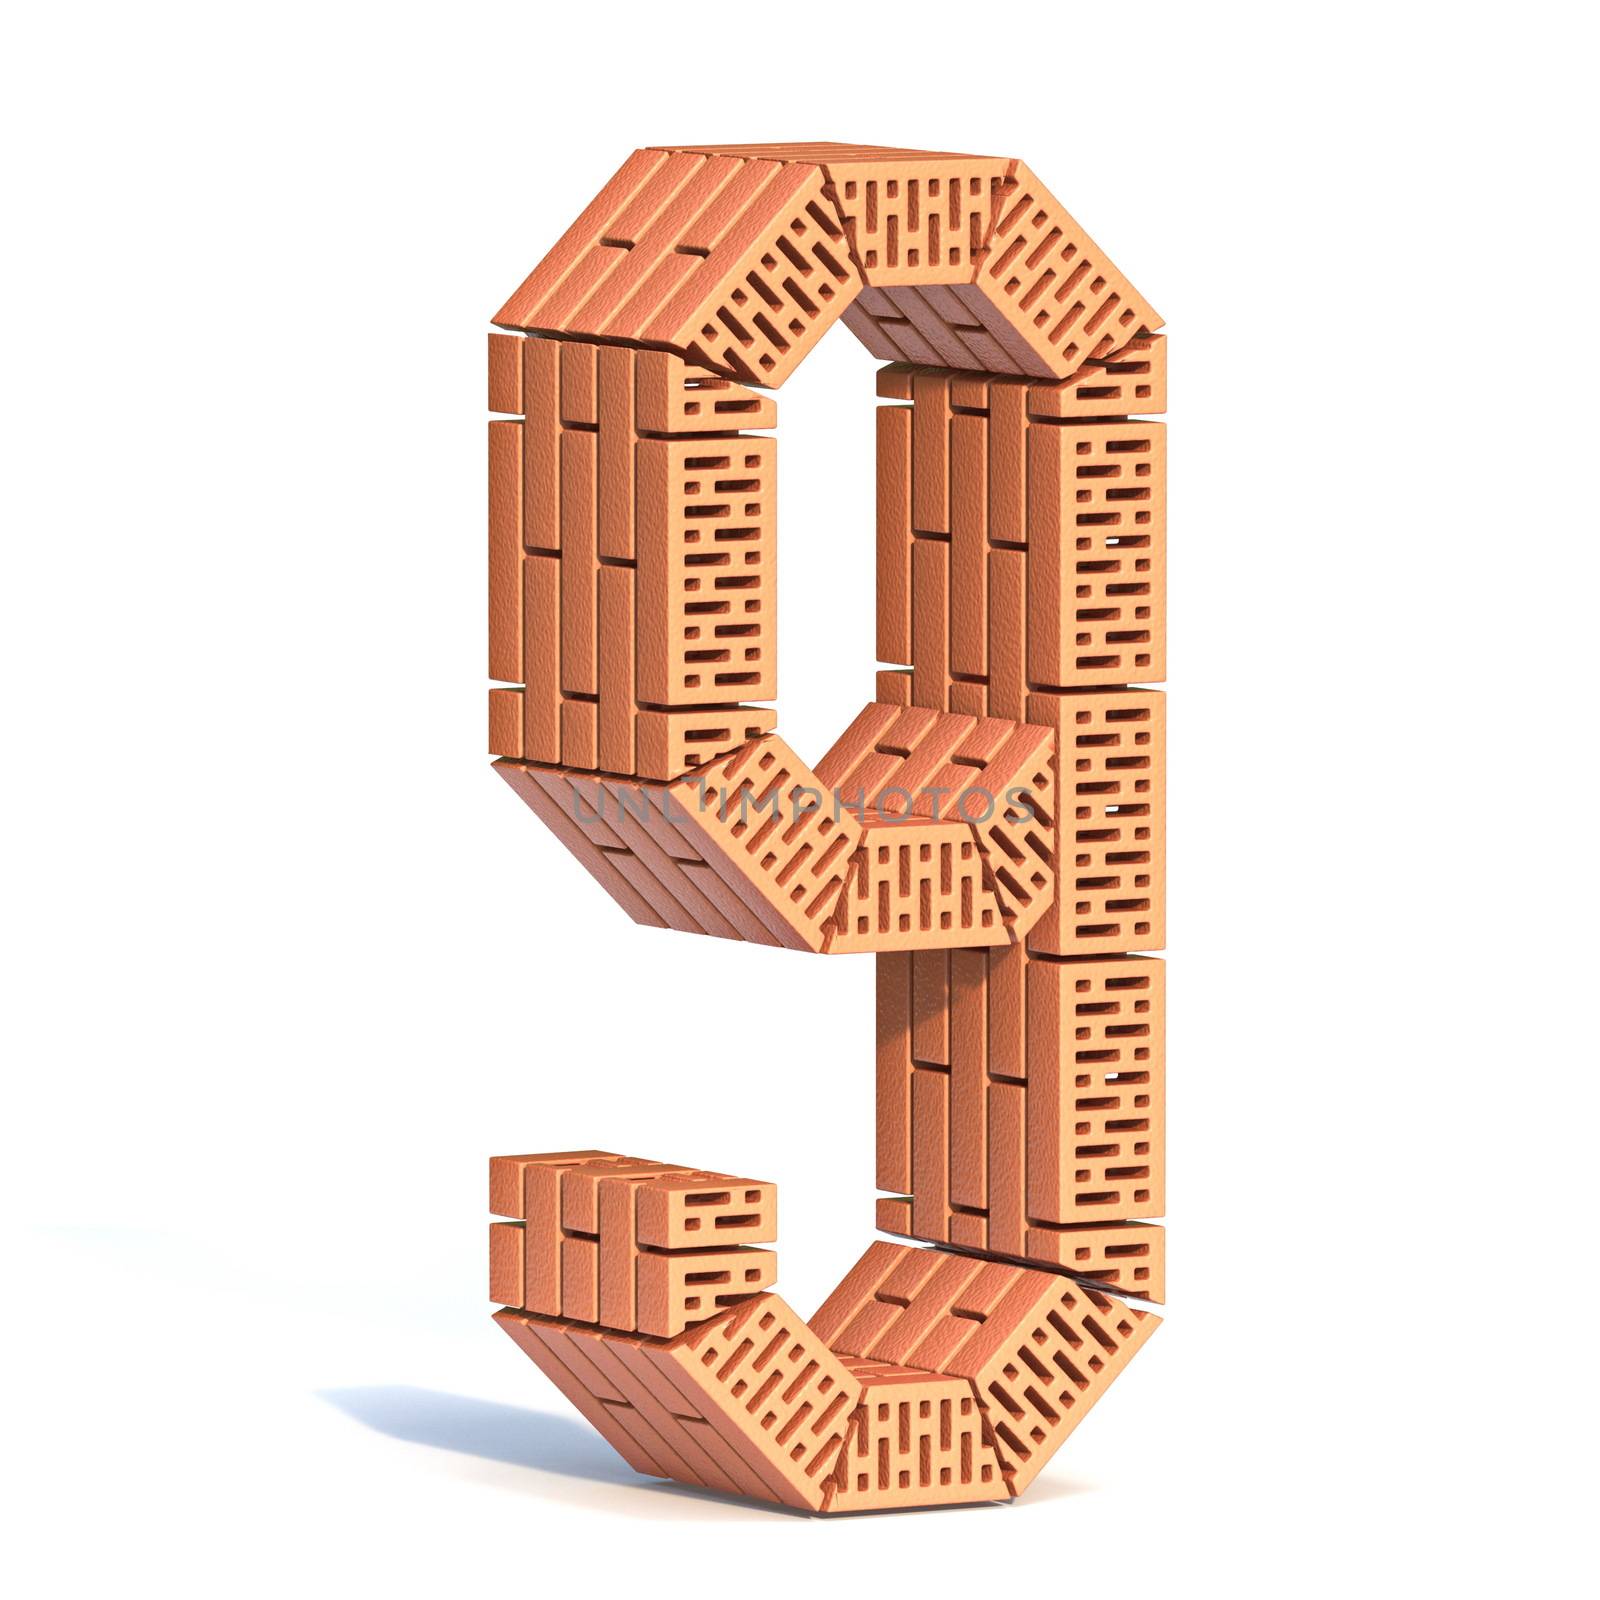 Brick wall font Number 9 NINE 3D render illustration isolated on white background